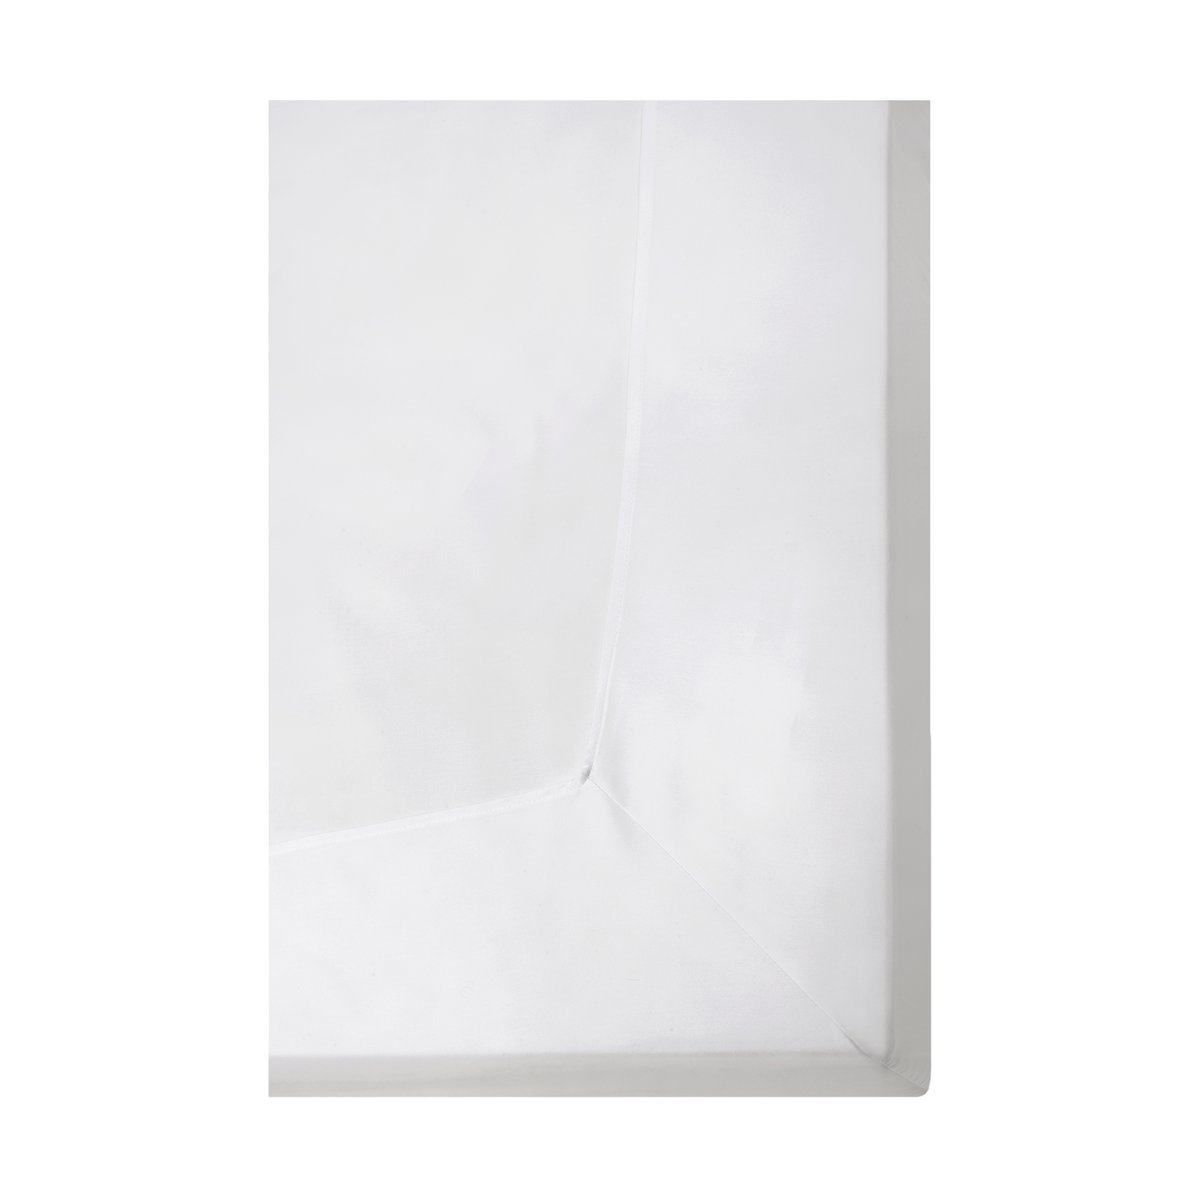 Himla Soul omslag genaaid hoeslaken 90x200 cm White